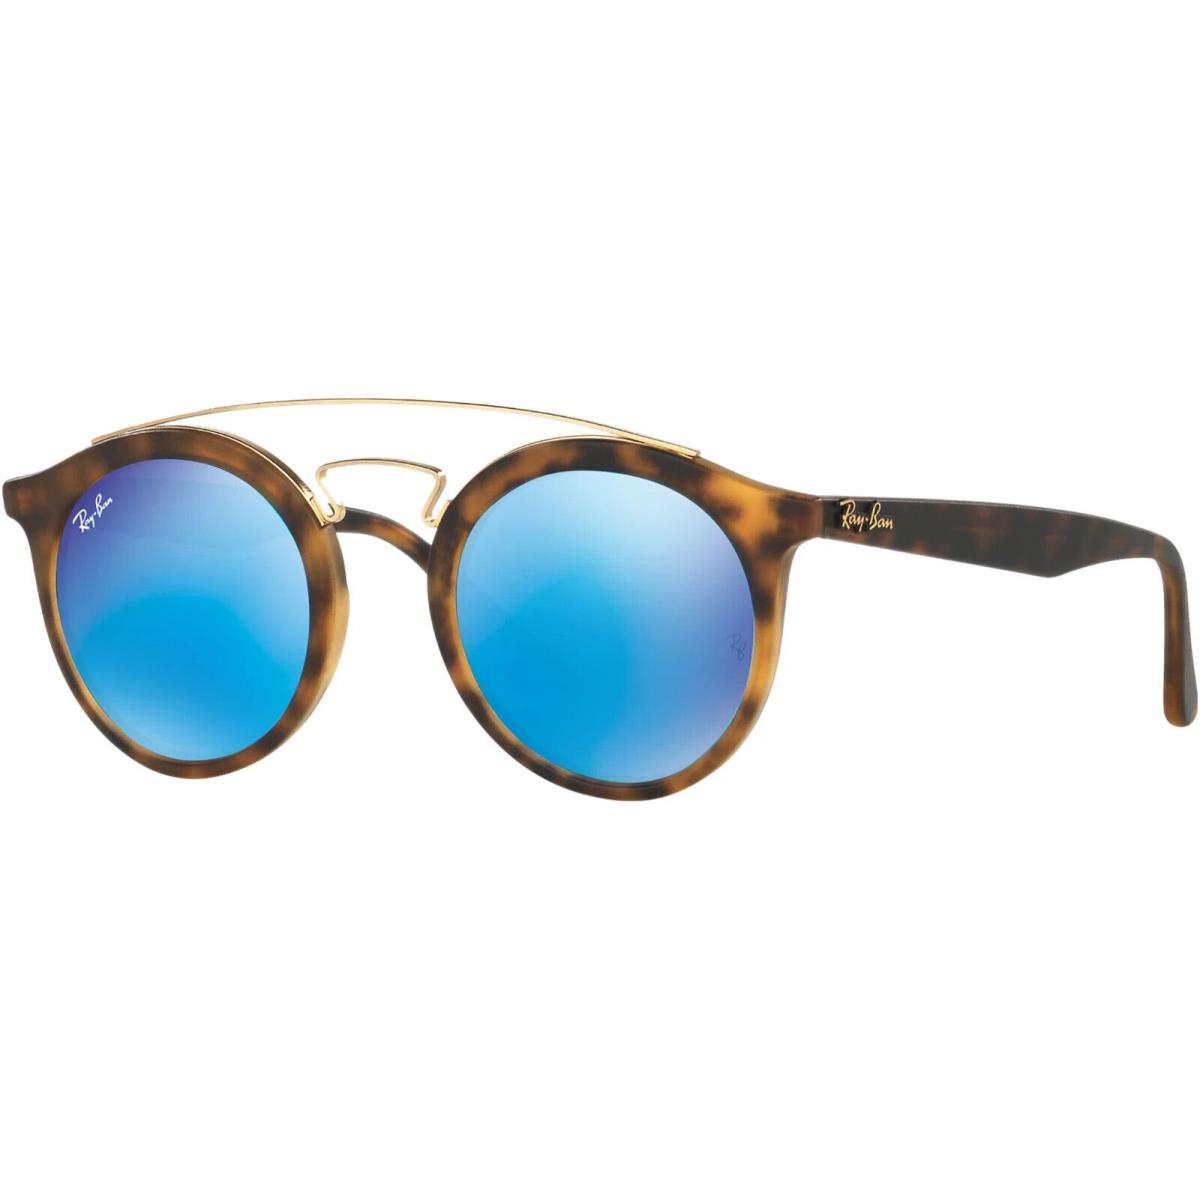 Ray-ban RB4256 Gatsby I Round Blue Mirror Sunglasses